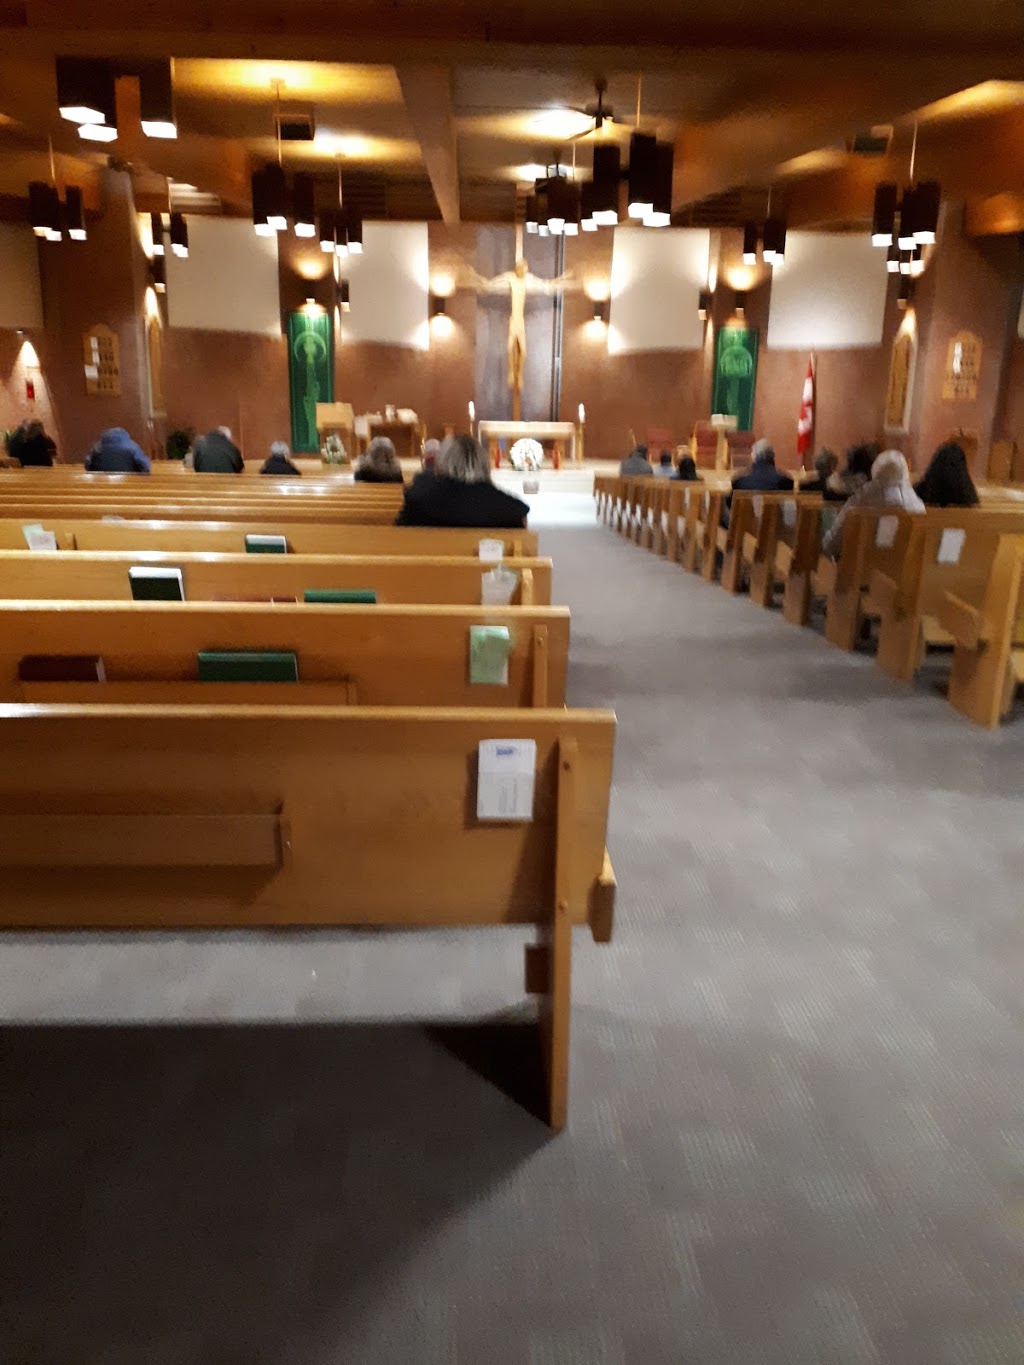 St. Bonaventure Church | 1600 Acadia Dr SE, Calgary, AB T2J 3B3, Canada | Phone: (403) 278-7556